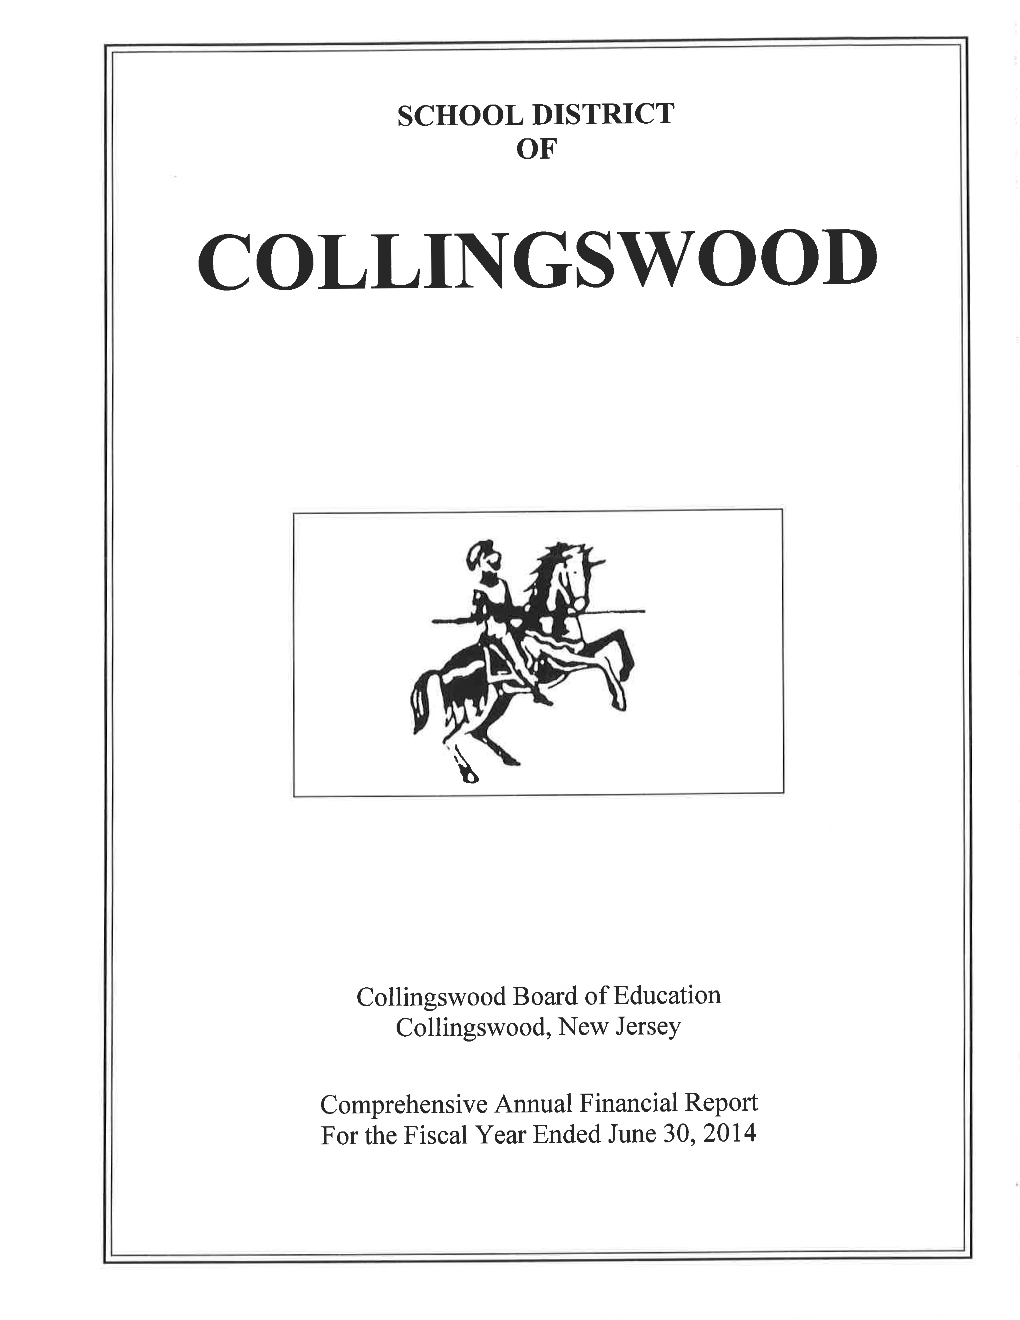 Collingswood School District